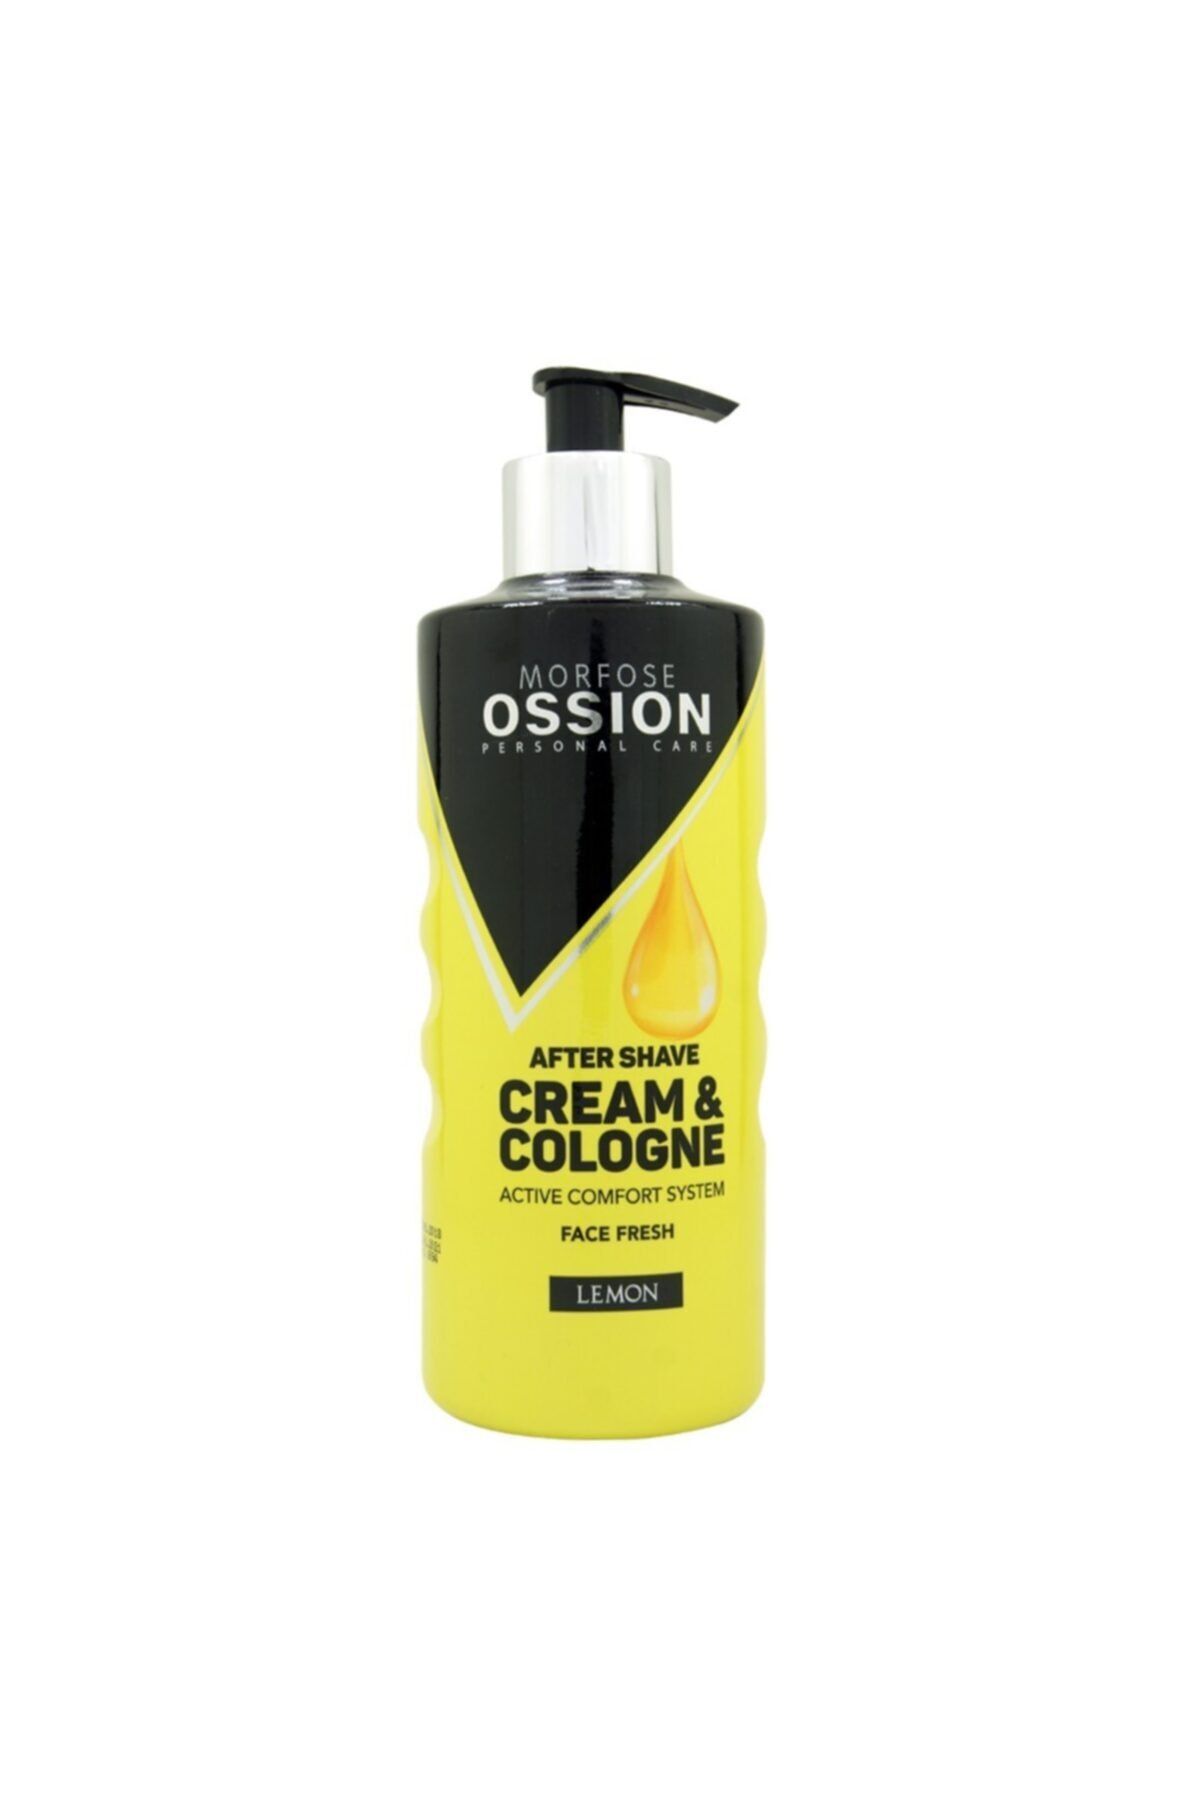 Morfose Ossion After Shave Cream Cologne Lemon